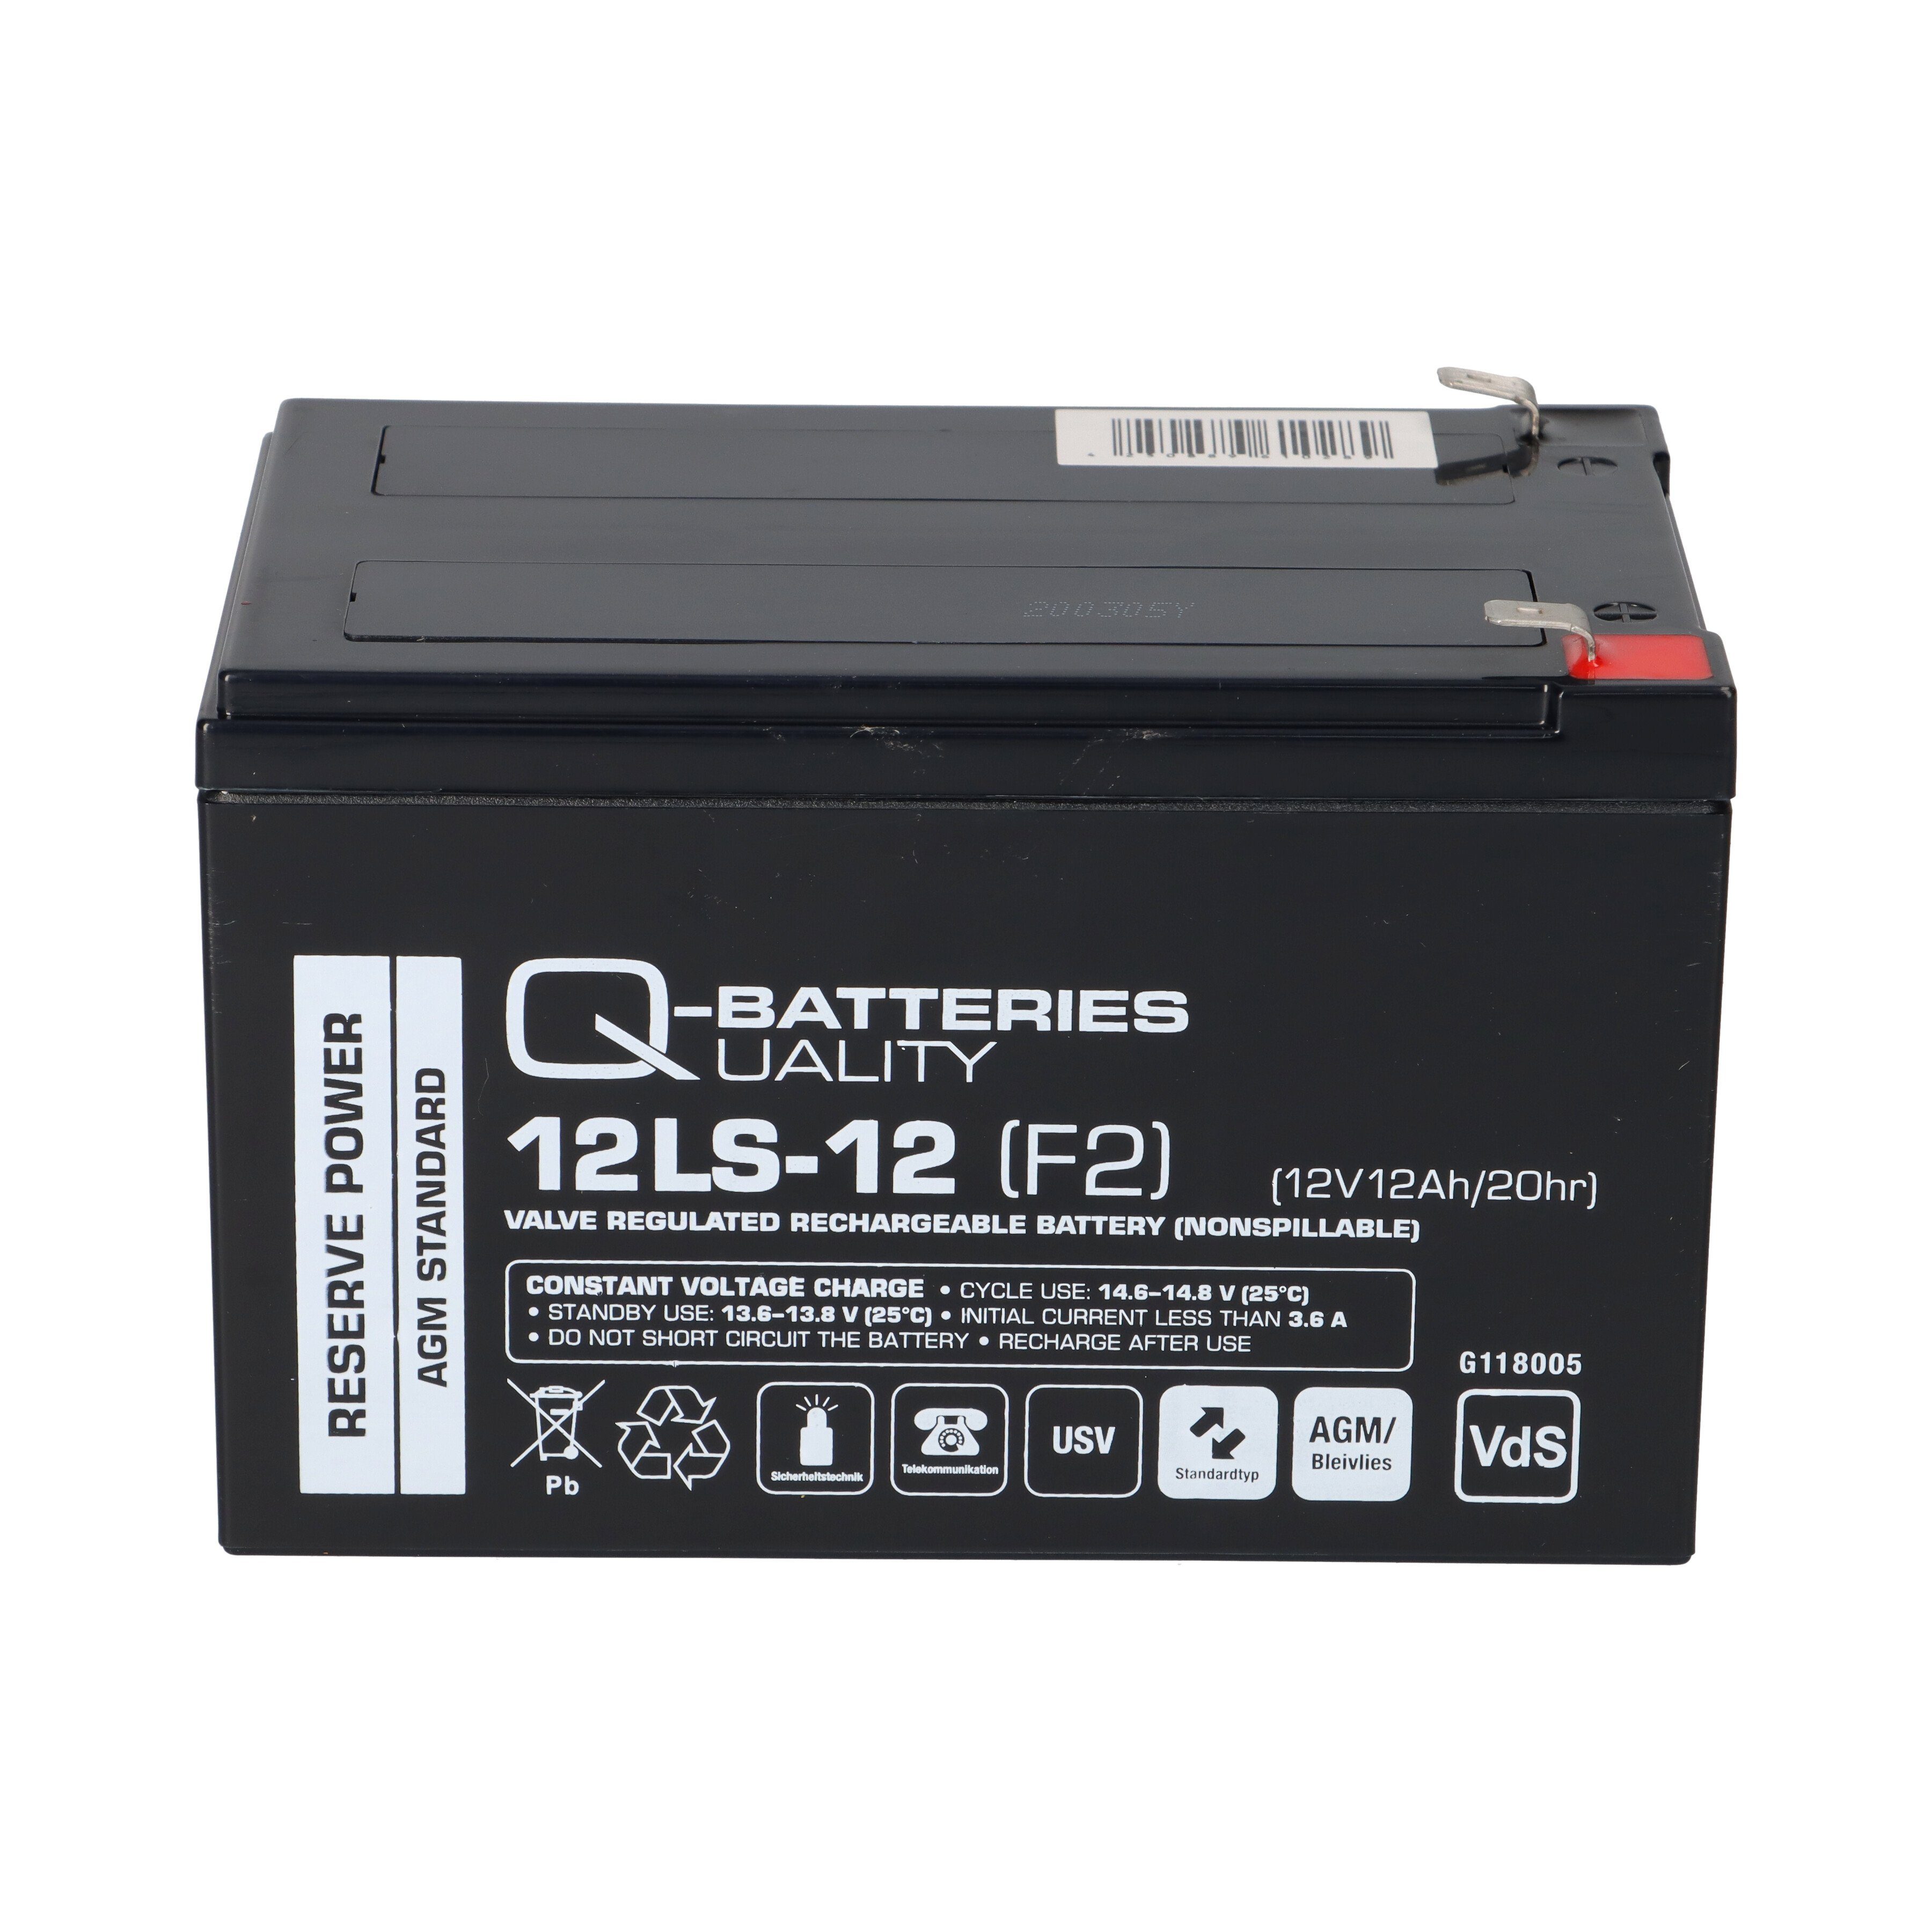 12LS-12 Q-Batteries mit F2 Bleiakkus / VdS Blei-Vlies-Akku VRLA Q-Batteries 12V 12Ah AGM